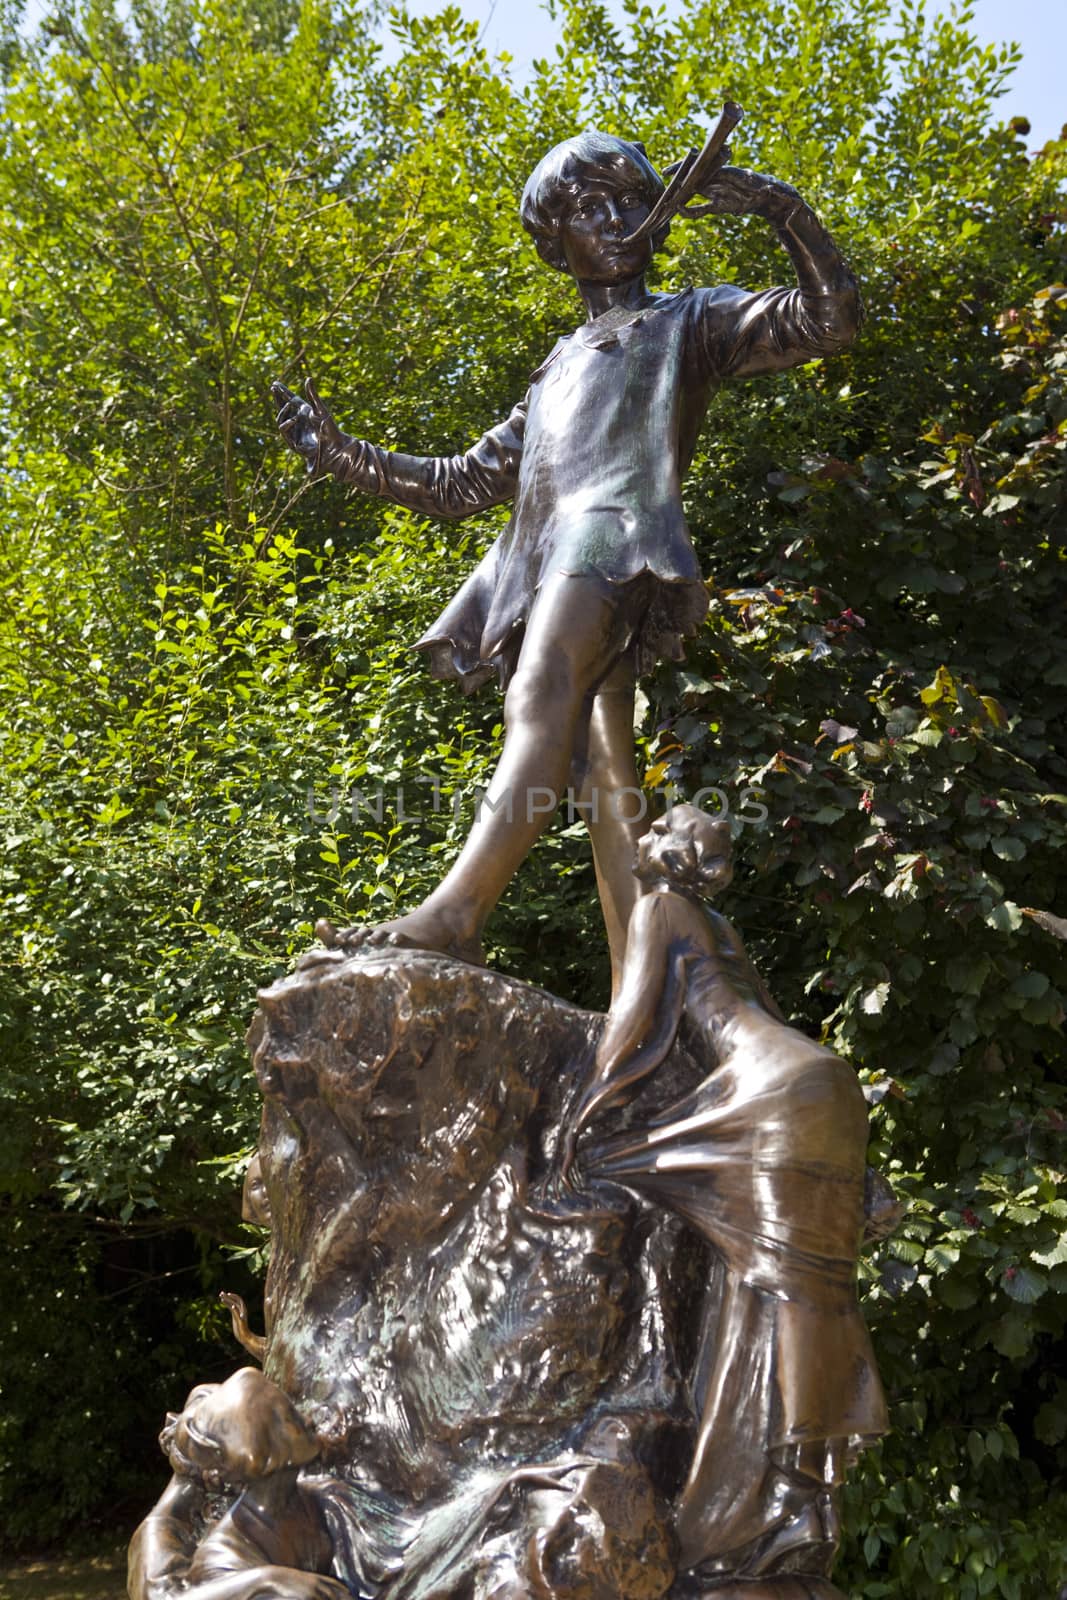 Peter Pan Statue in London by chrisdorney